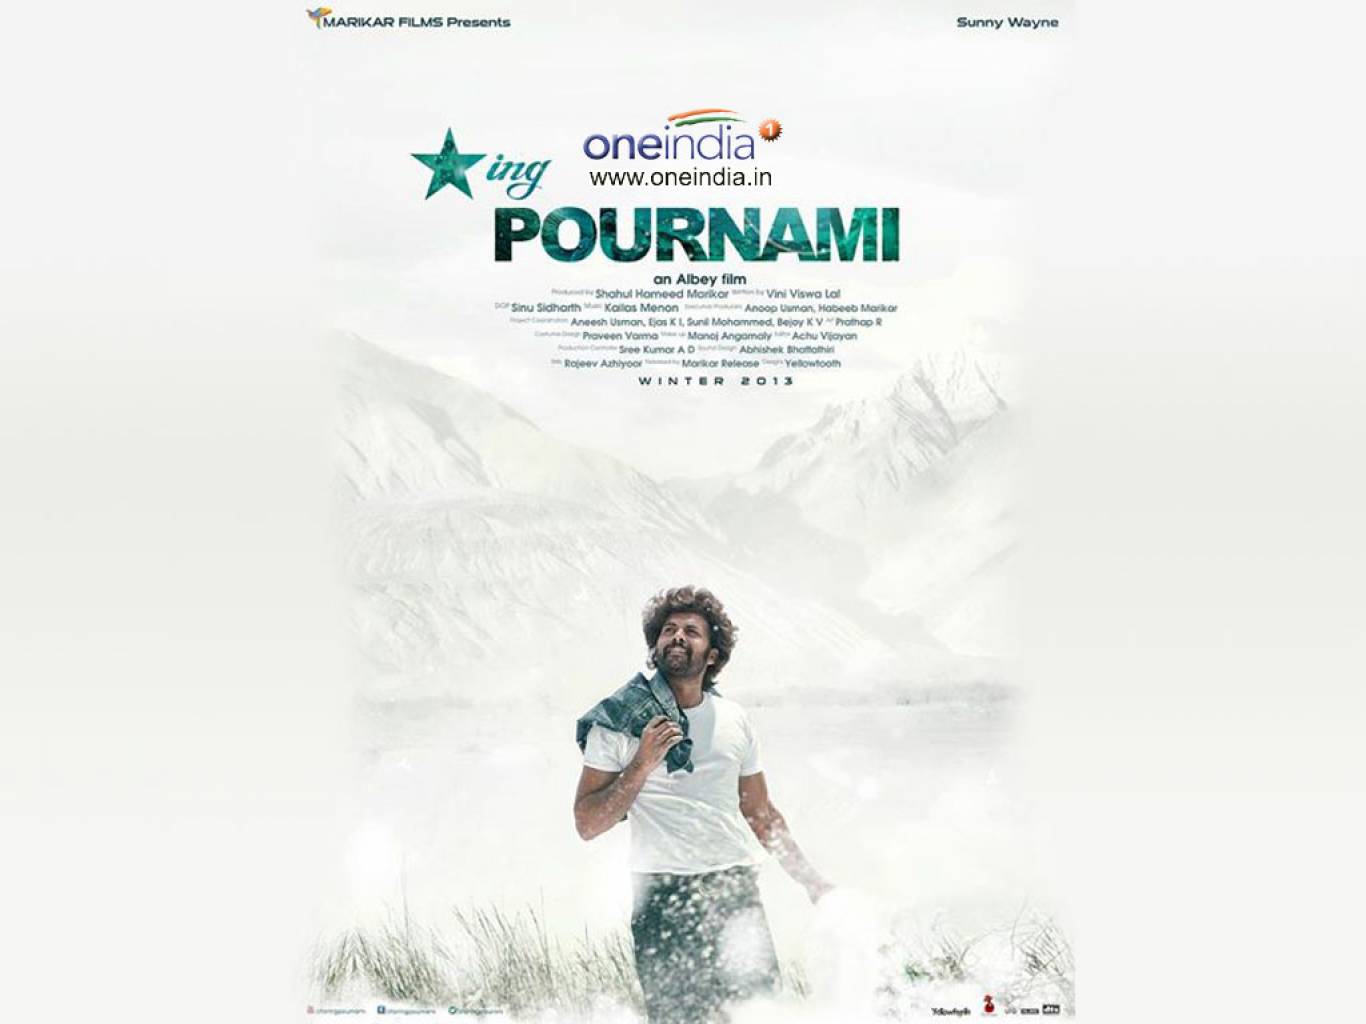 Starring Pournami Movie HD Wallpaper. Starring Pournami HD Movie Wallpaper Free Download (1080p to 2K)